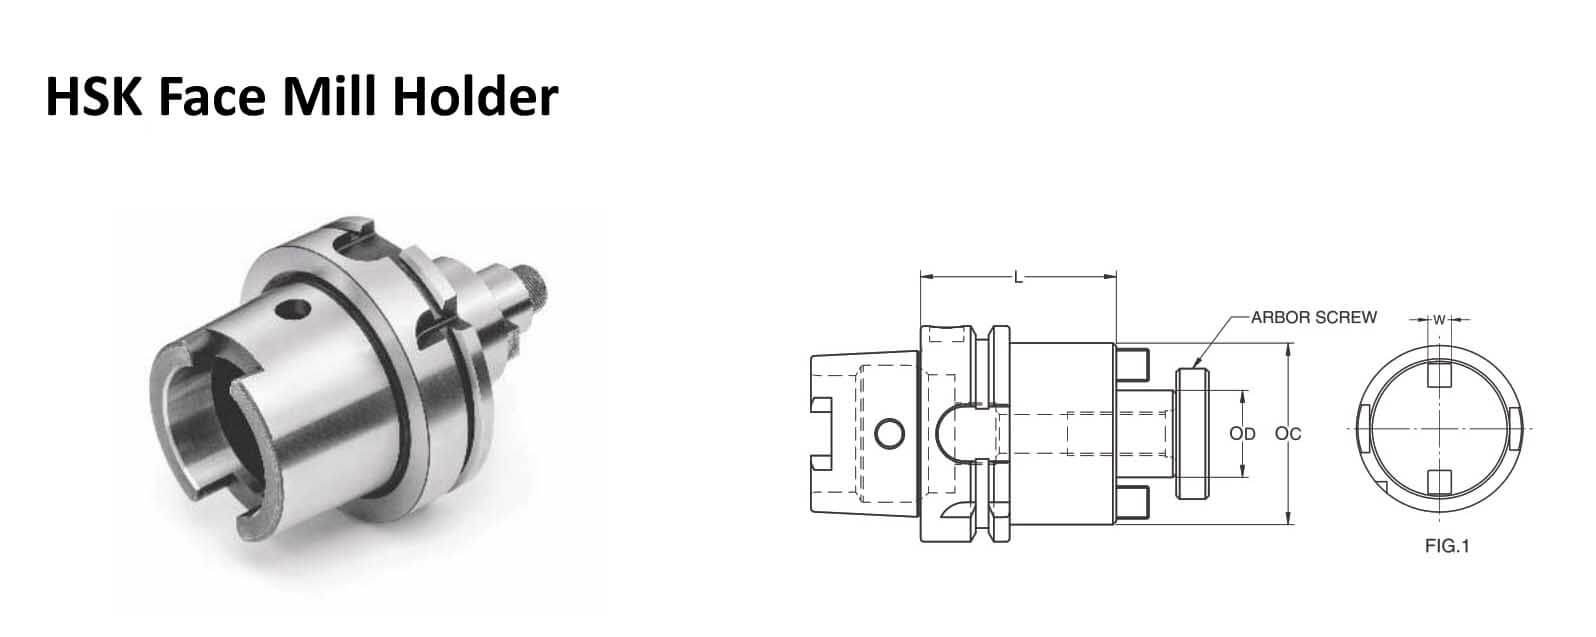 HSK-A 100 FMH 2.000 - 2.50 Face Mill Holder (Balanced to 2.5G 25000 RPM) (DIN 6357)